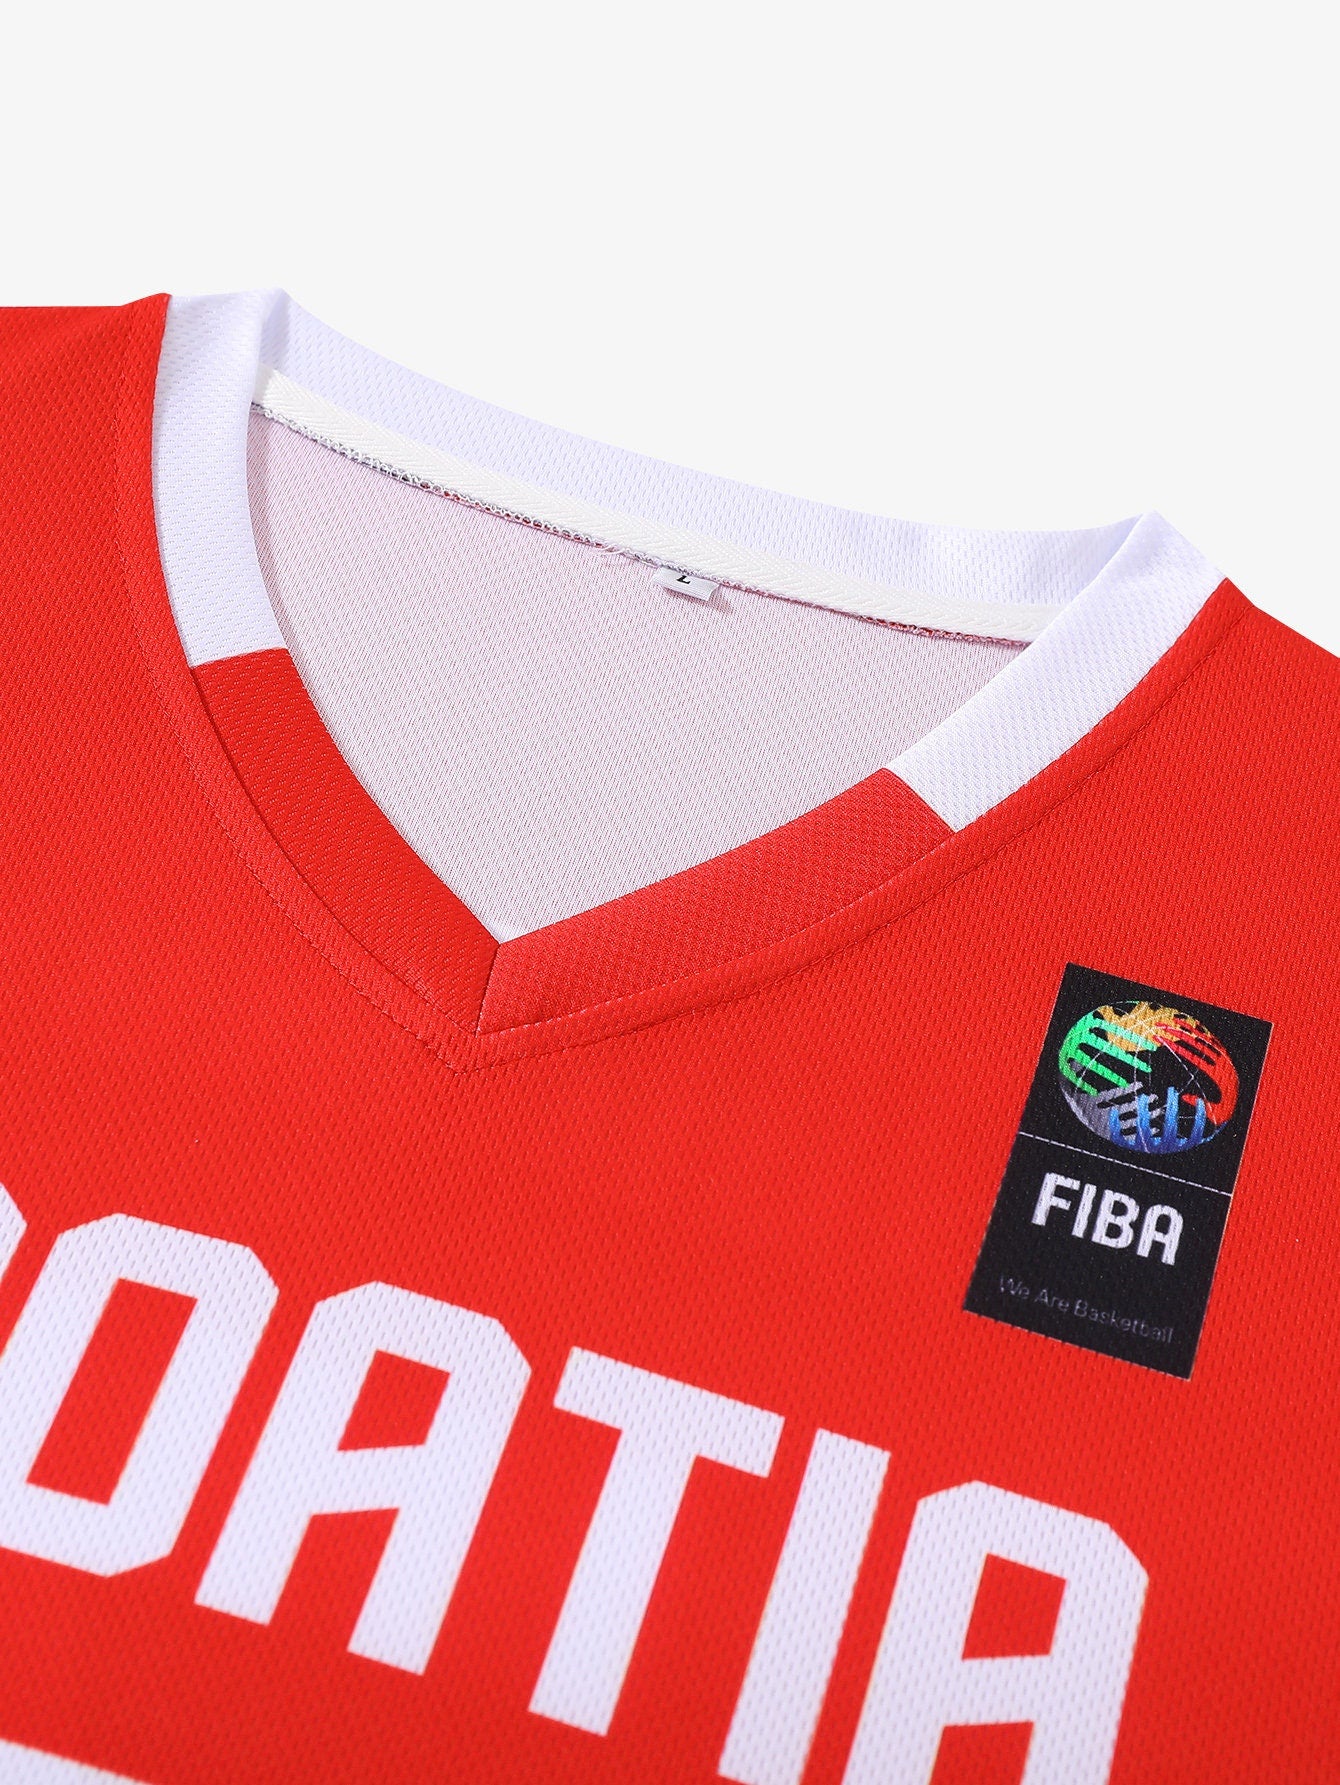 Bojan Bogdanovic Croatia National Team Basketball Jersey